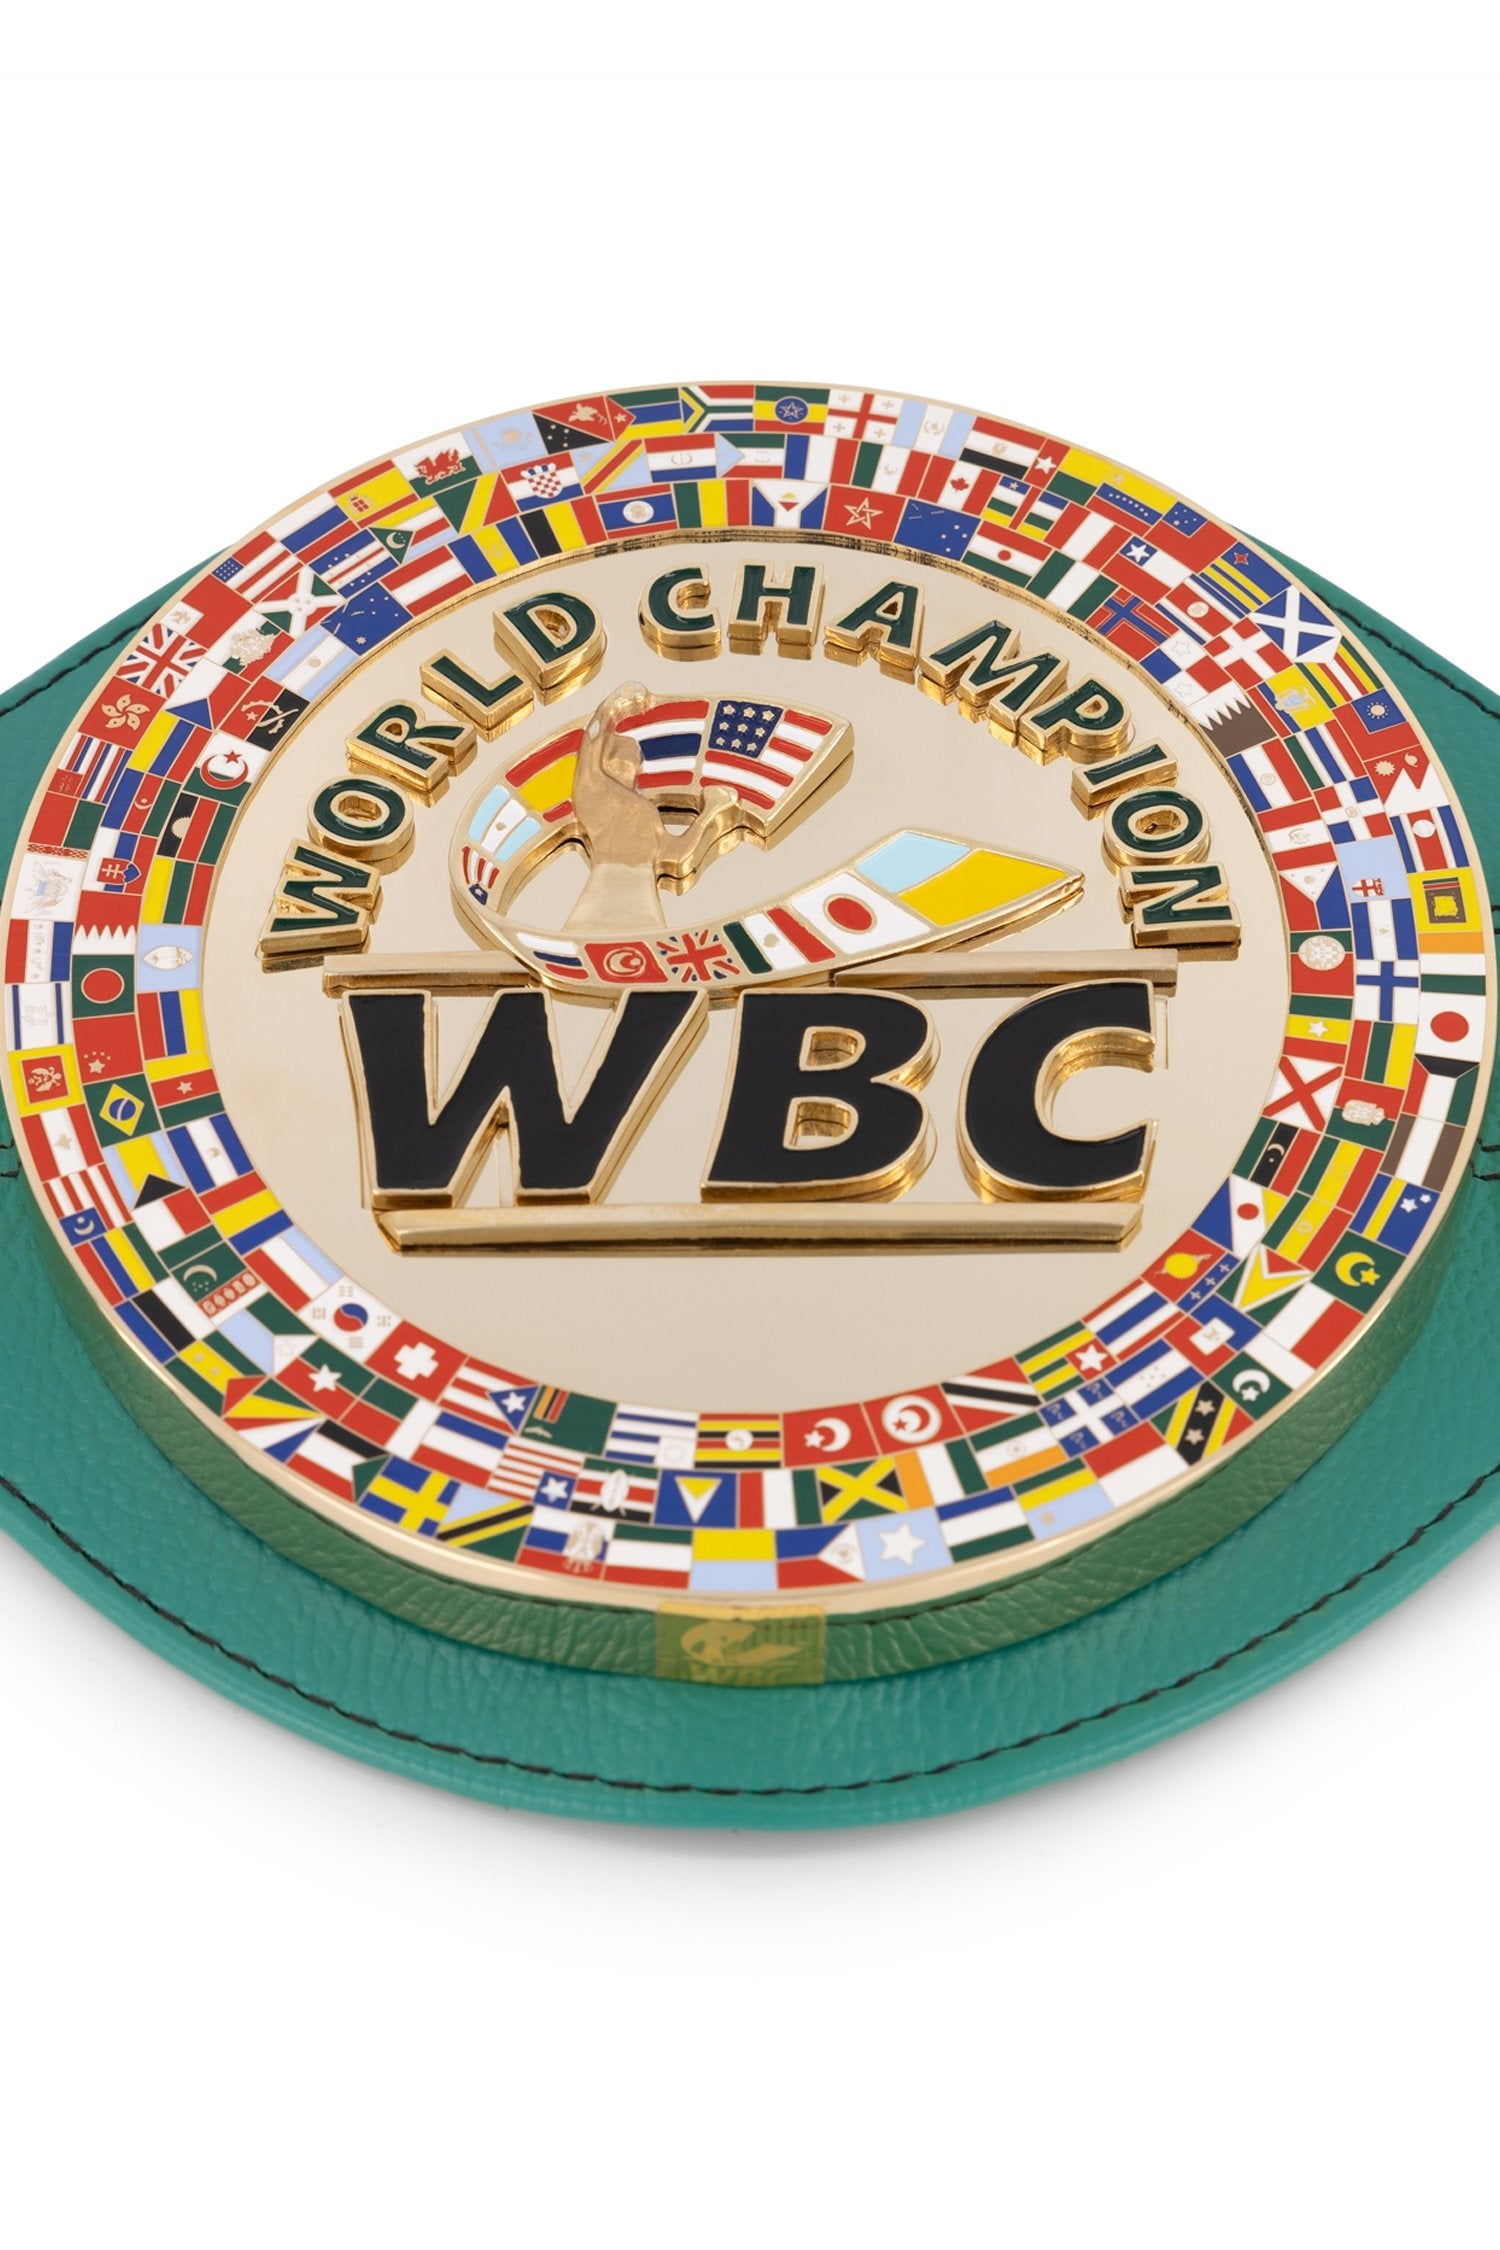 WBC Store Replica Belts WBC Replica Championship Belt Memorabilia Floyd Mayweather